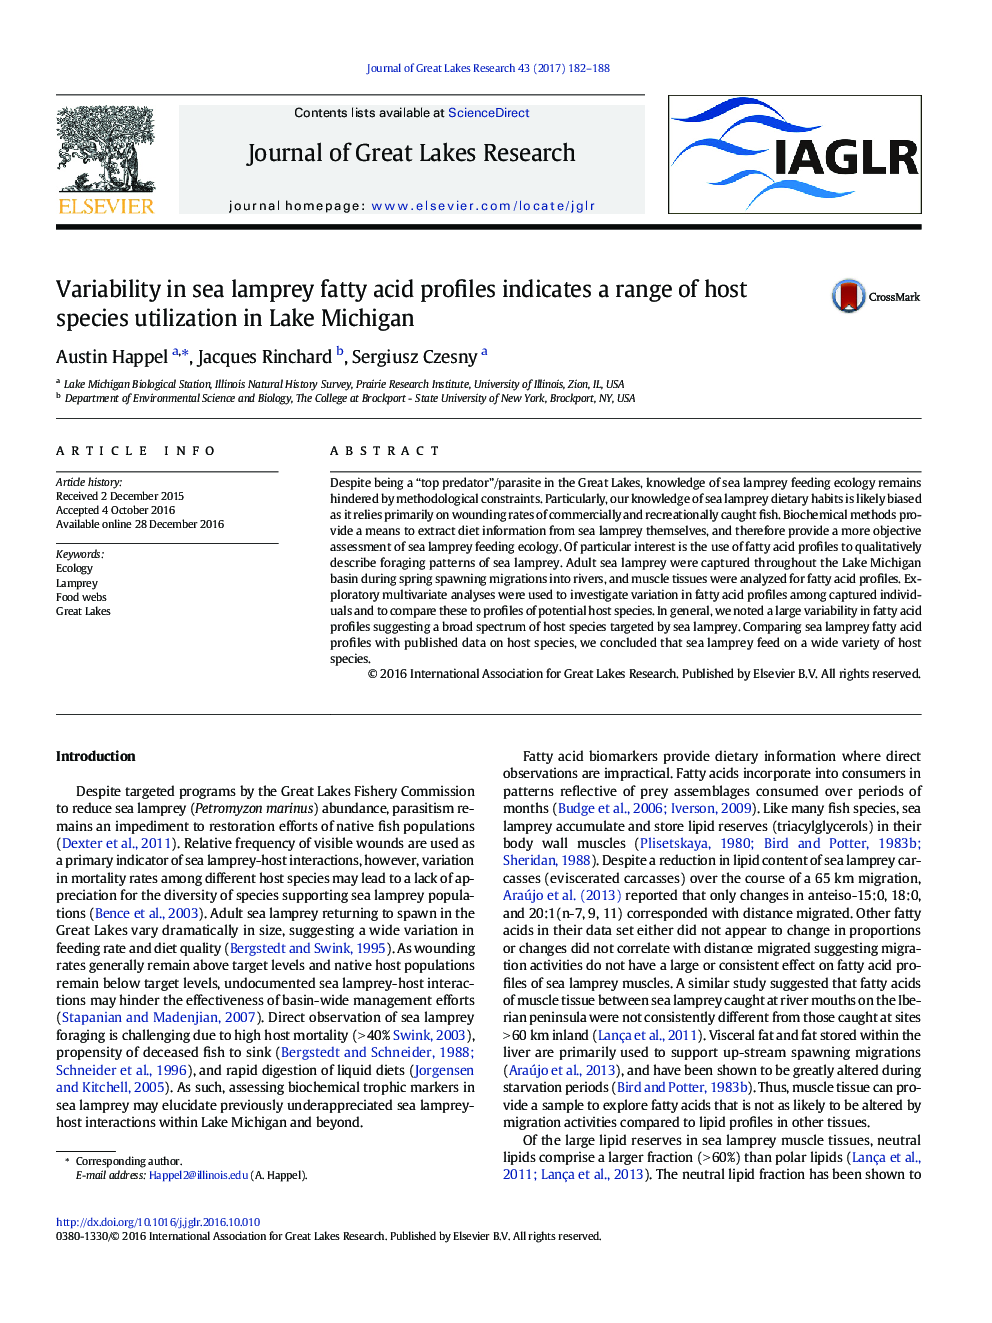 Variability in sea lamprey fatty acid profiles indicates a range of host species utilization in Lake Michigan